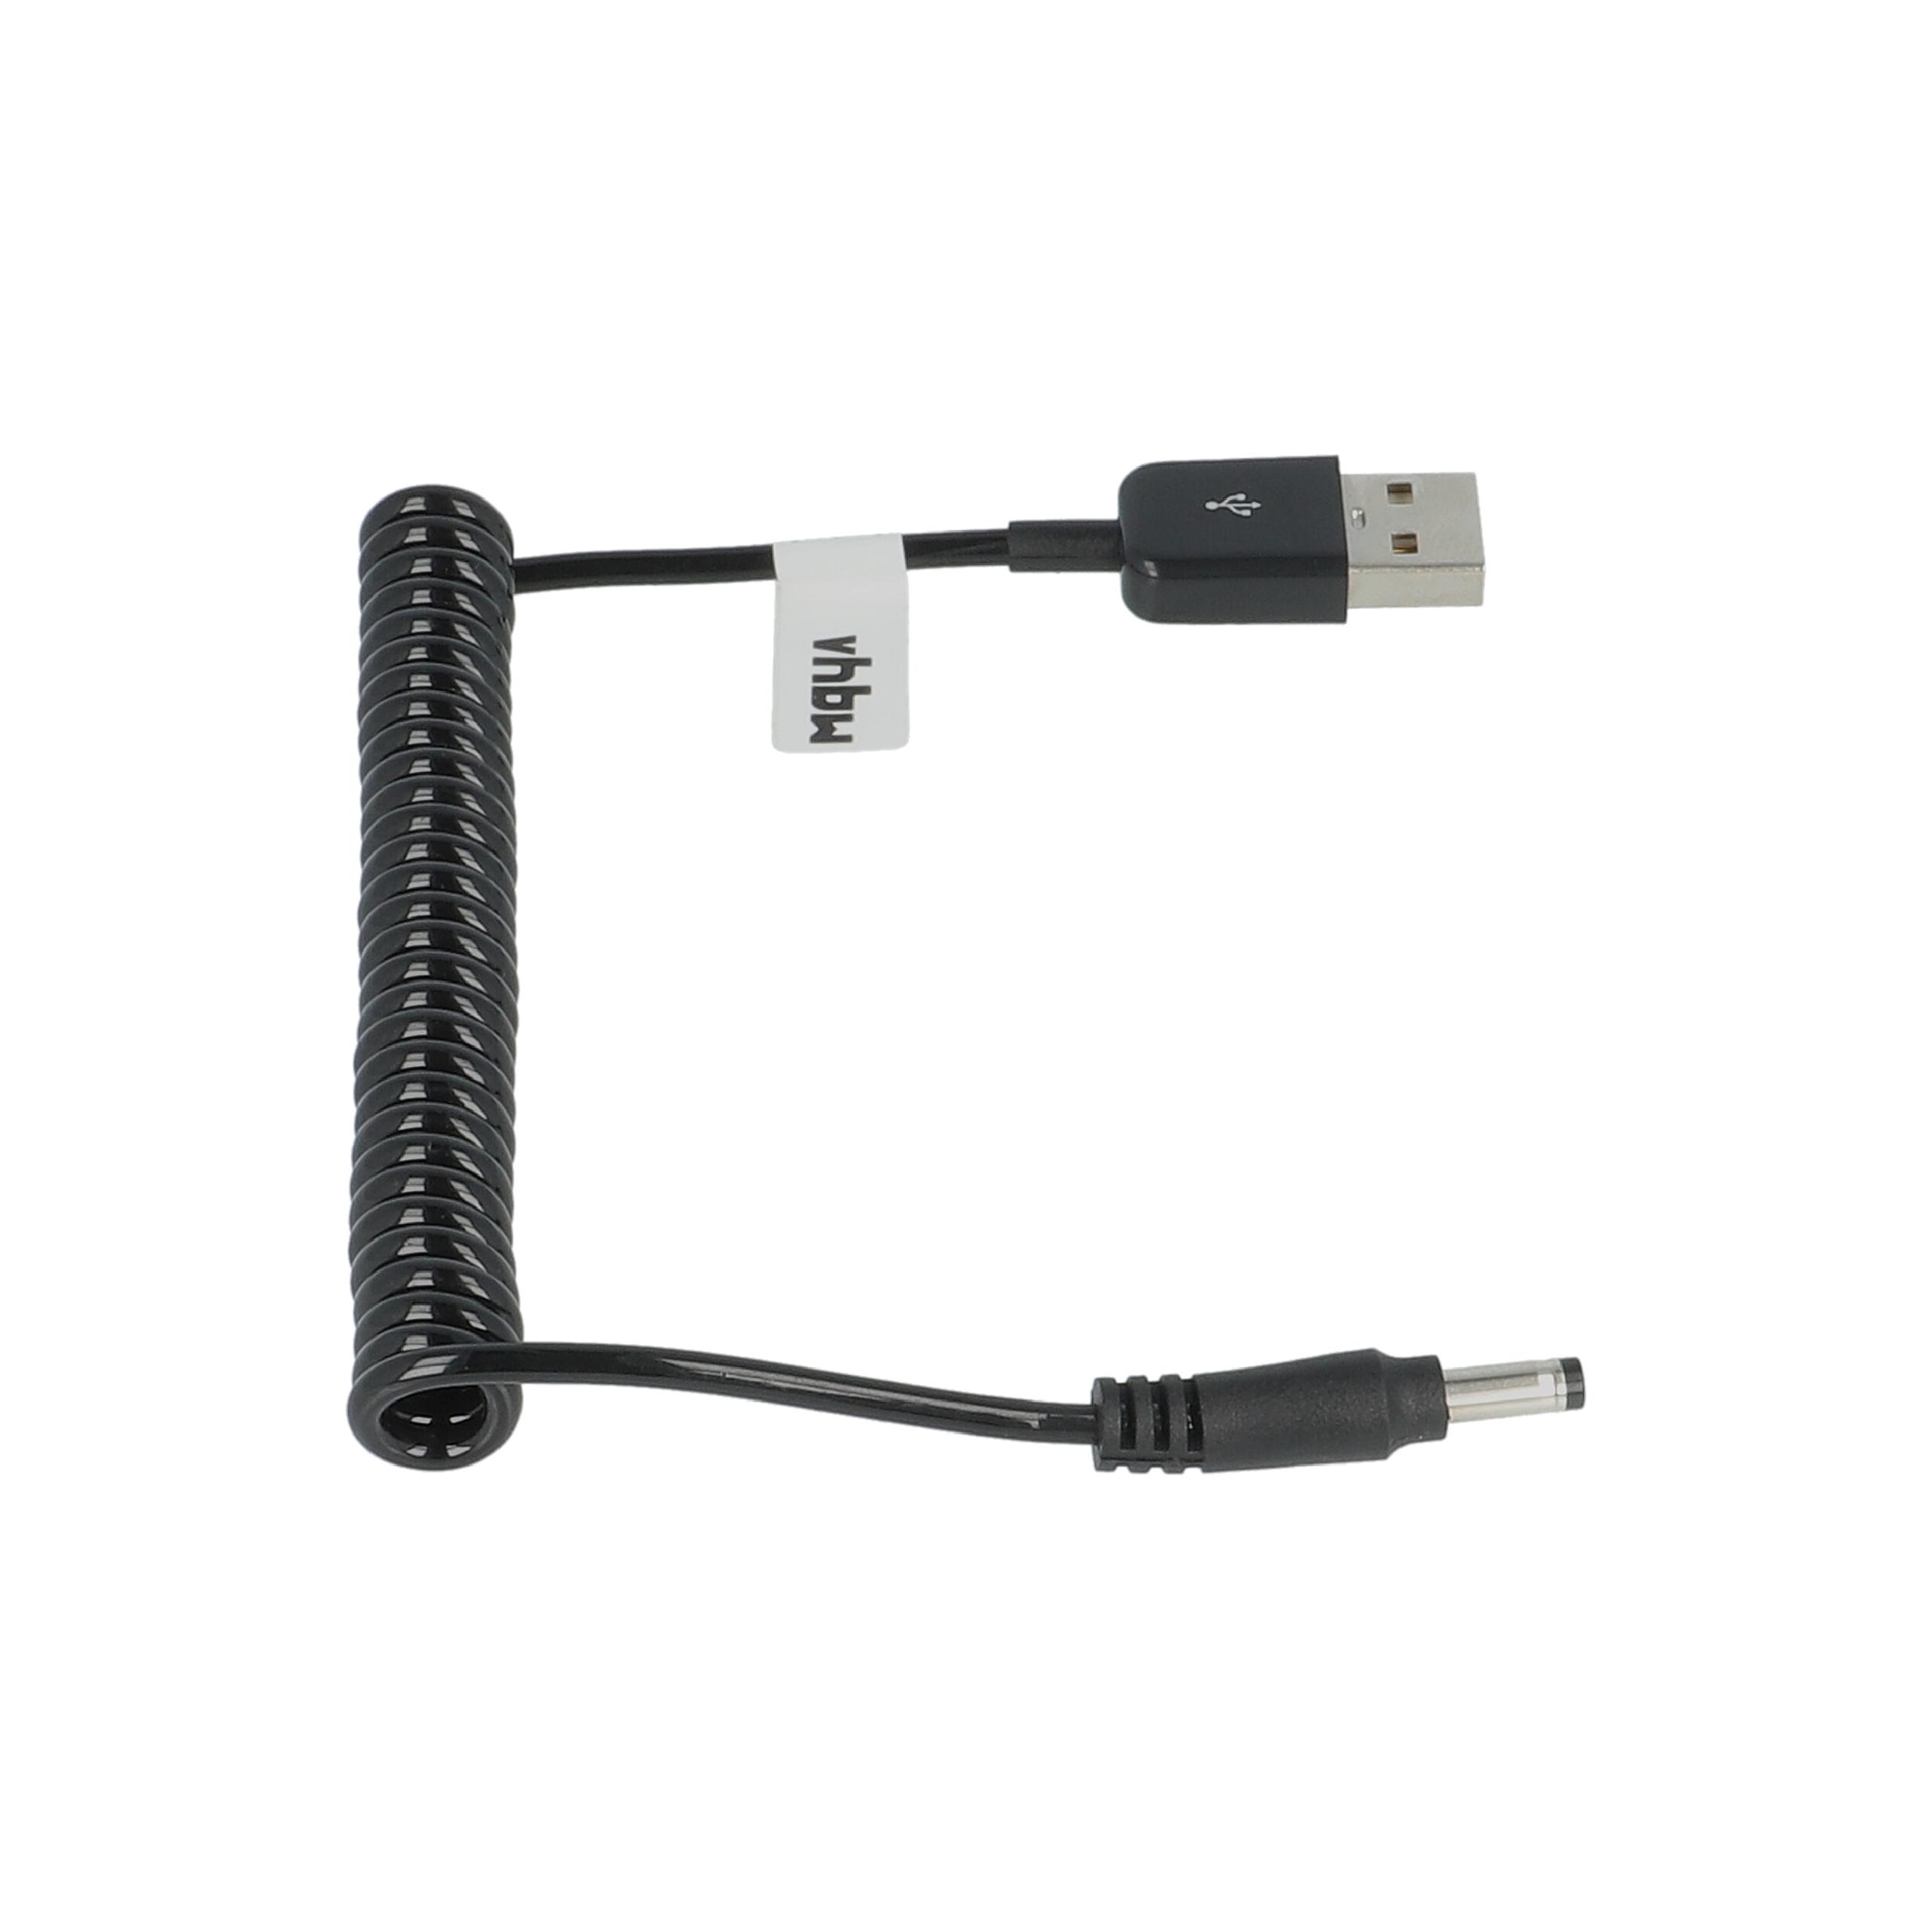 Kabel USB do ładowania aparatu Panasonic zamiennik Panasonic K2GHYYS00002 - 1 m